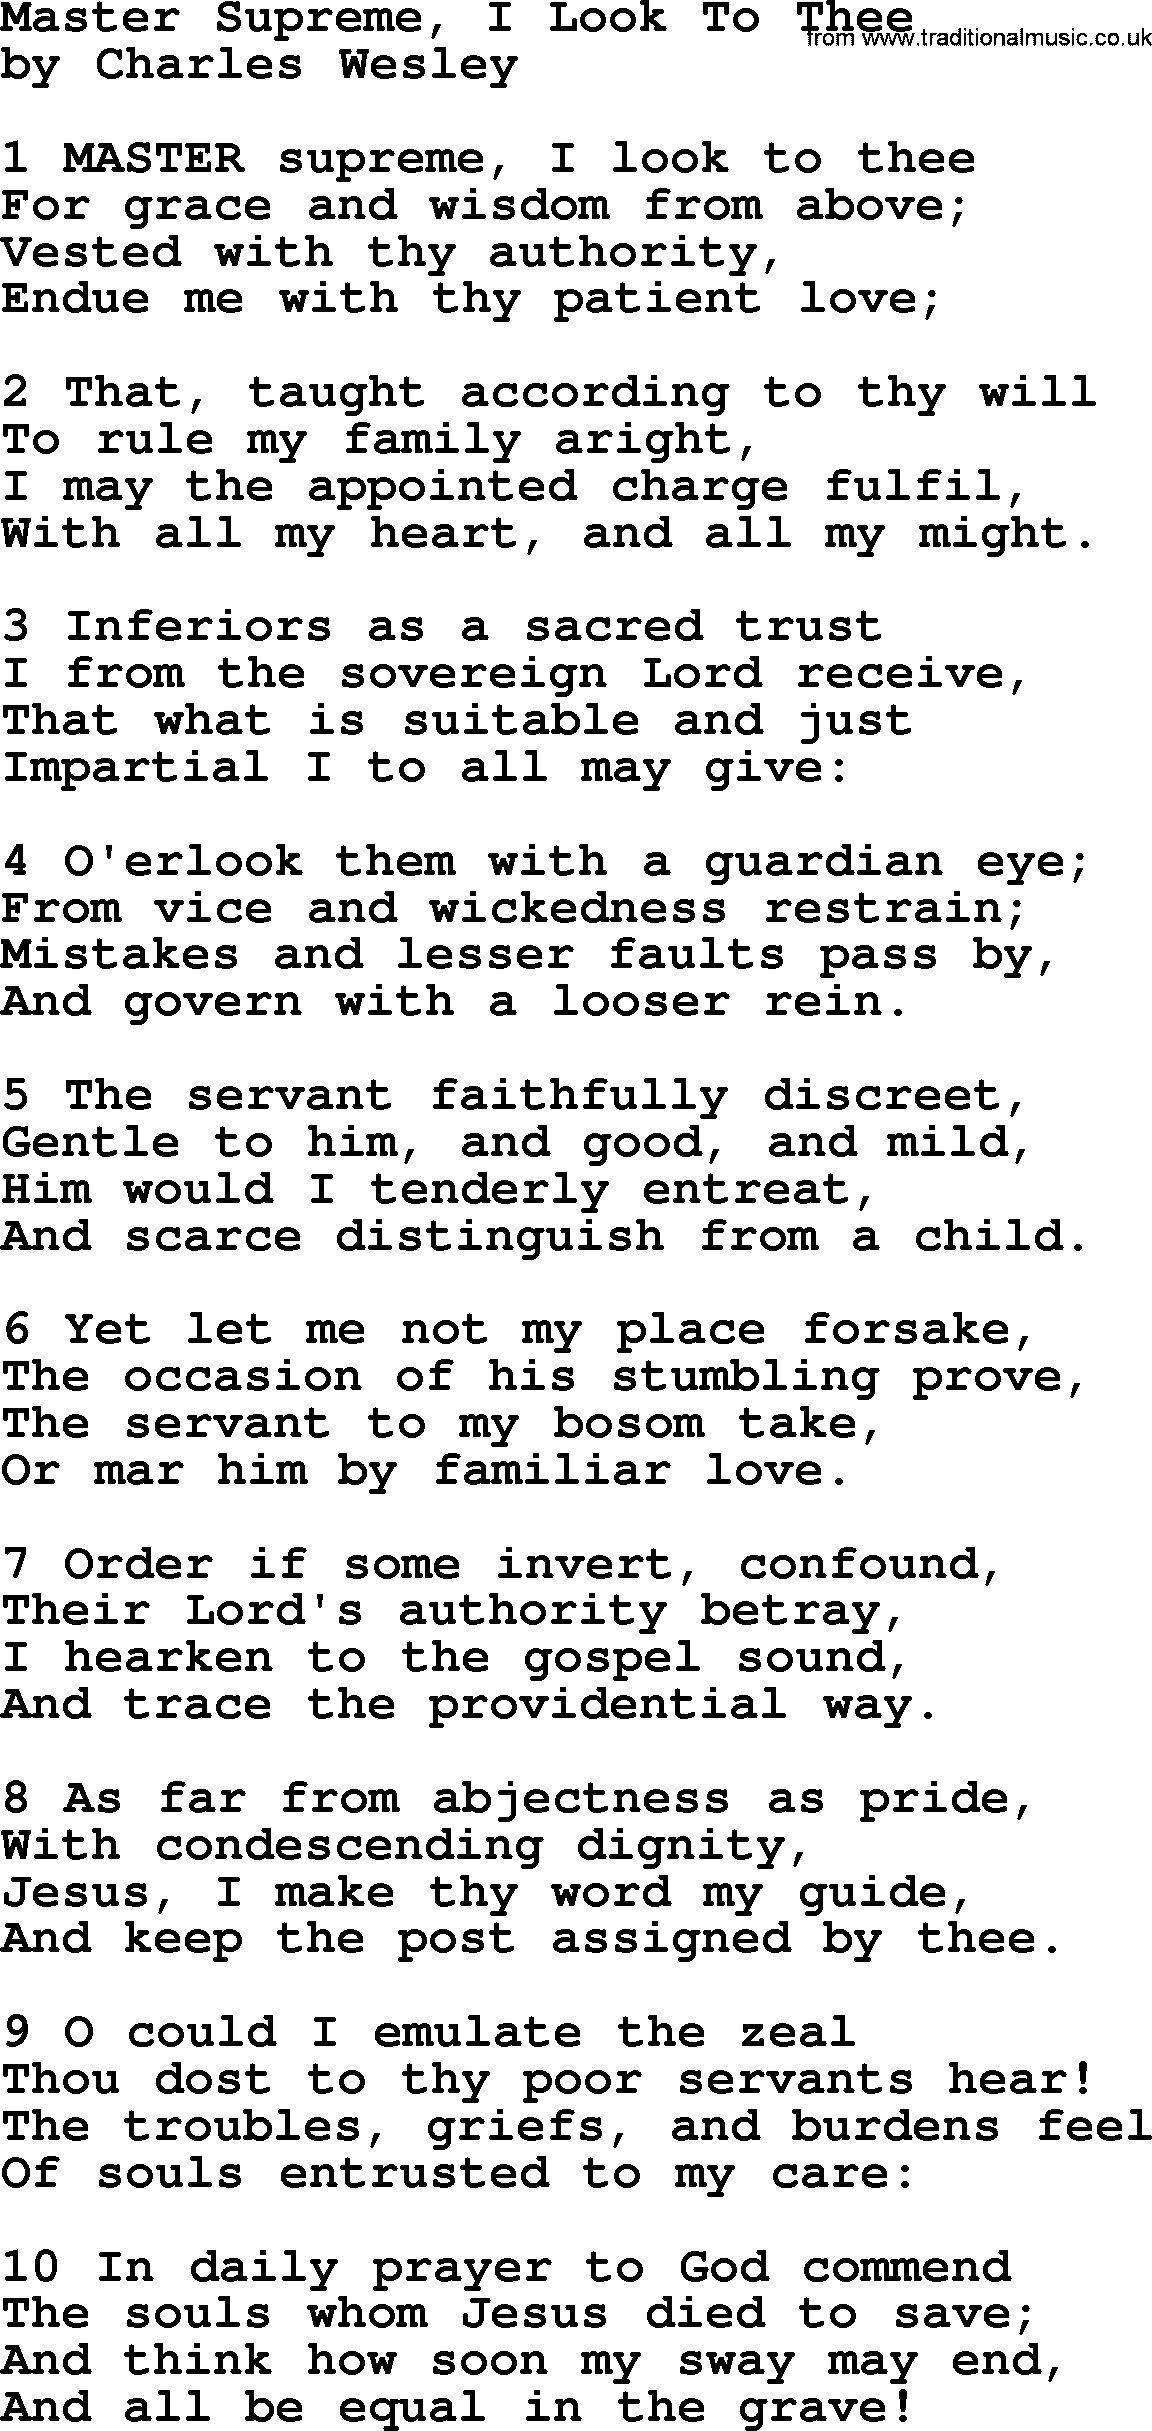 Charles Wesley hymn: Master Supreme, I Look To Thee, lyrics